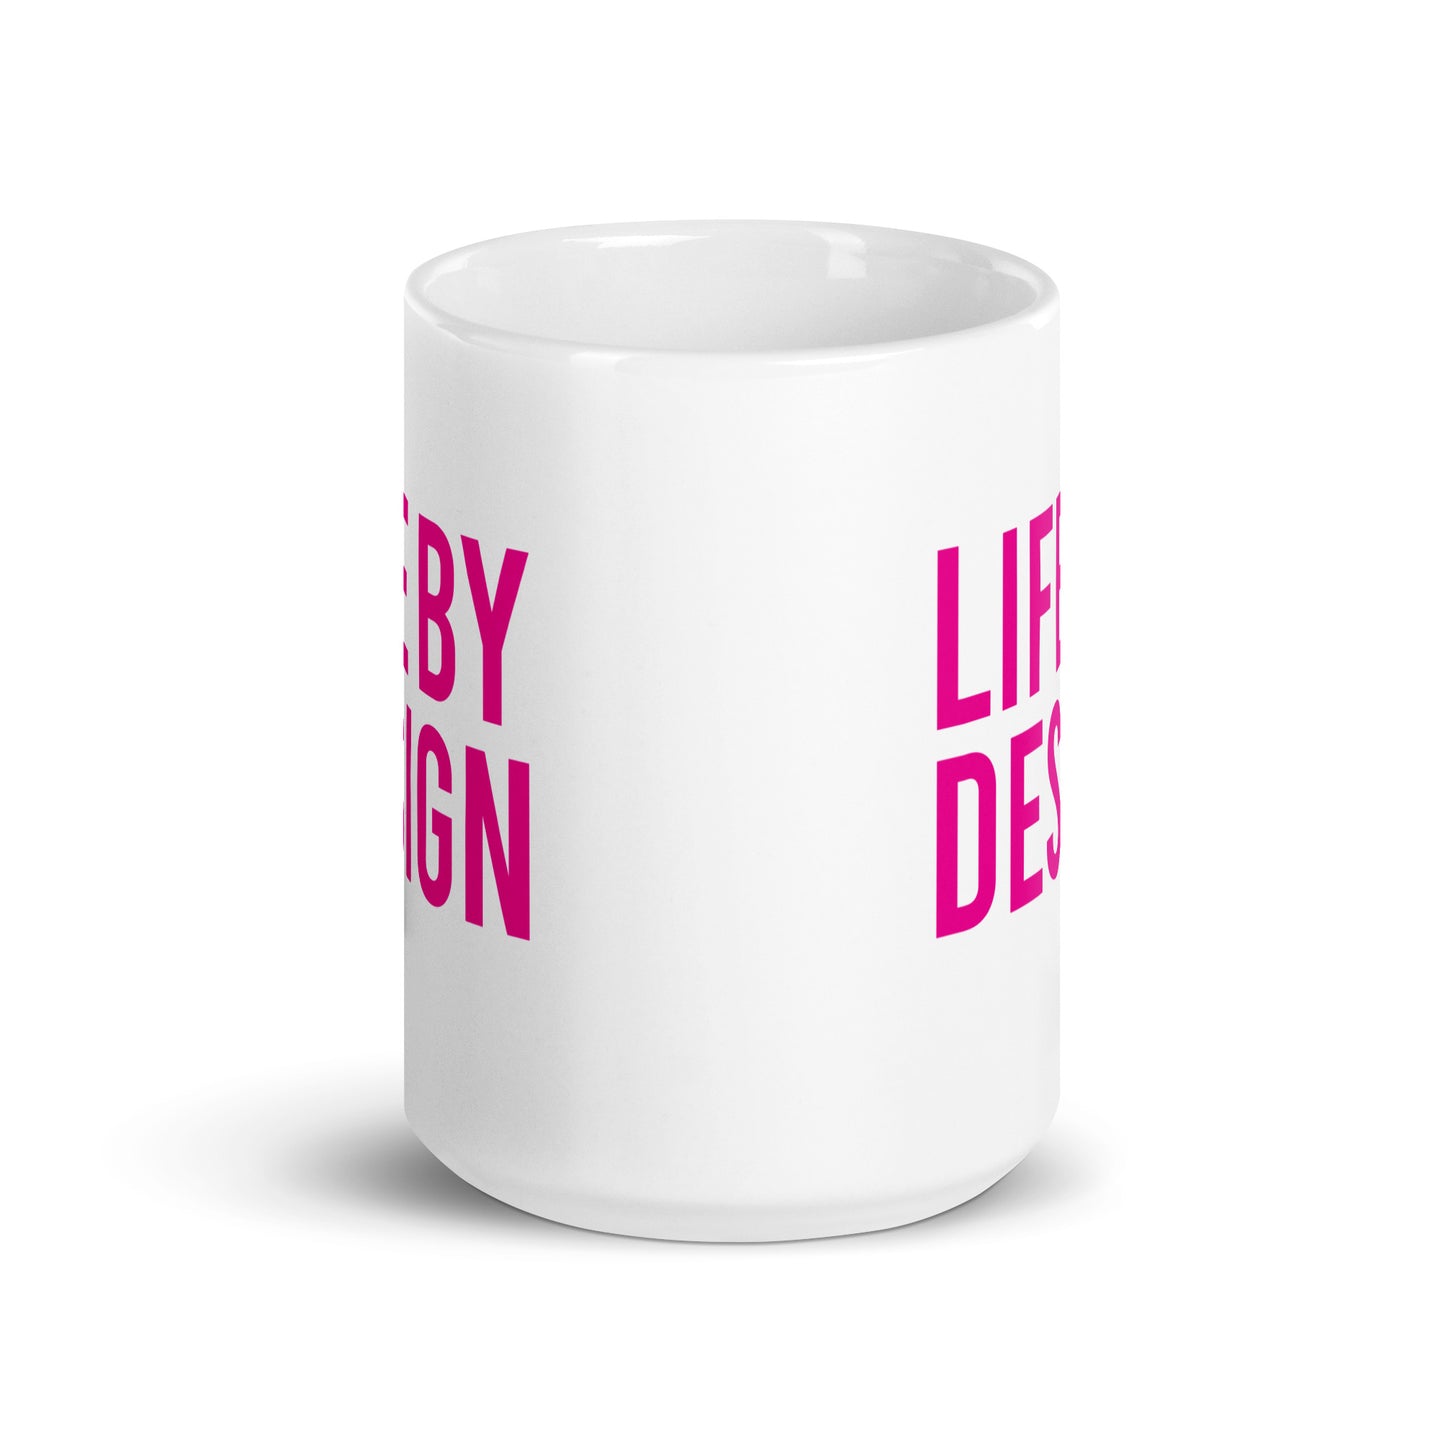 Life By Design White glossy mug